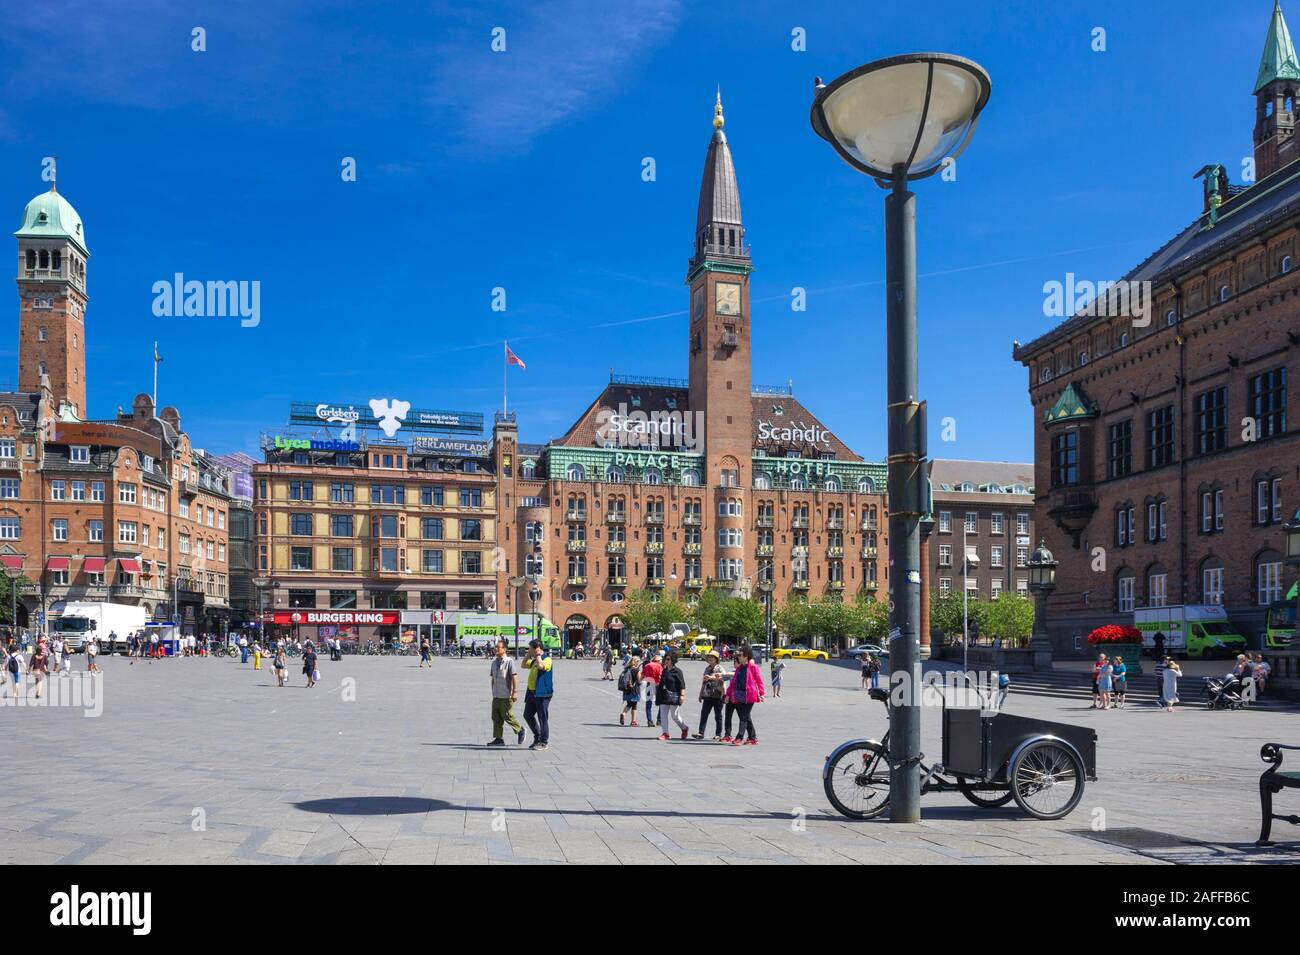 City Hall Square with the Scandic Palace Hotel, Copenhagen, Denmark Stock Photo